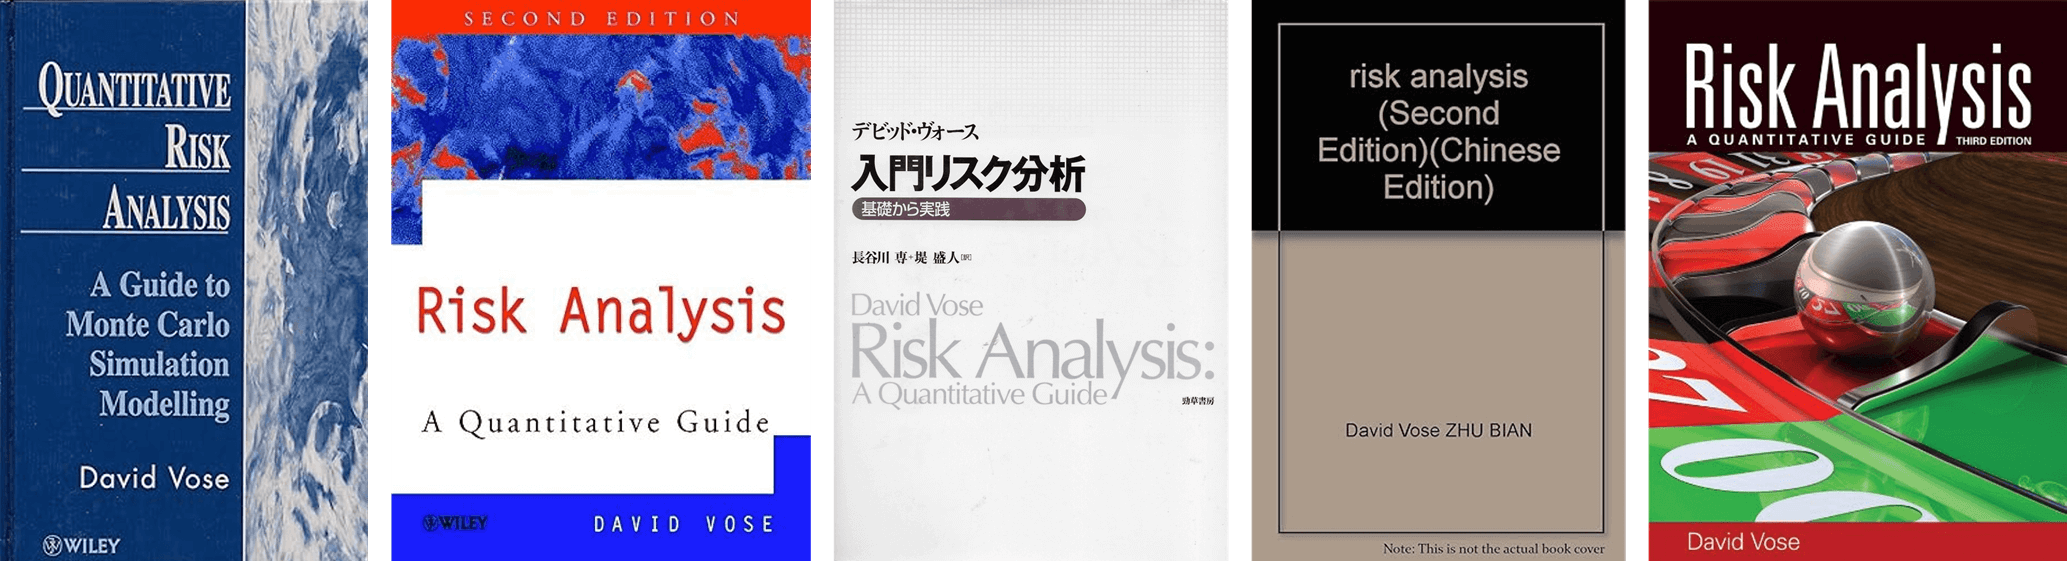 David Vose quantitative risk analysis books covers